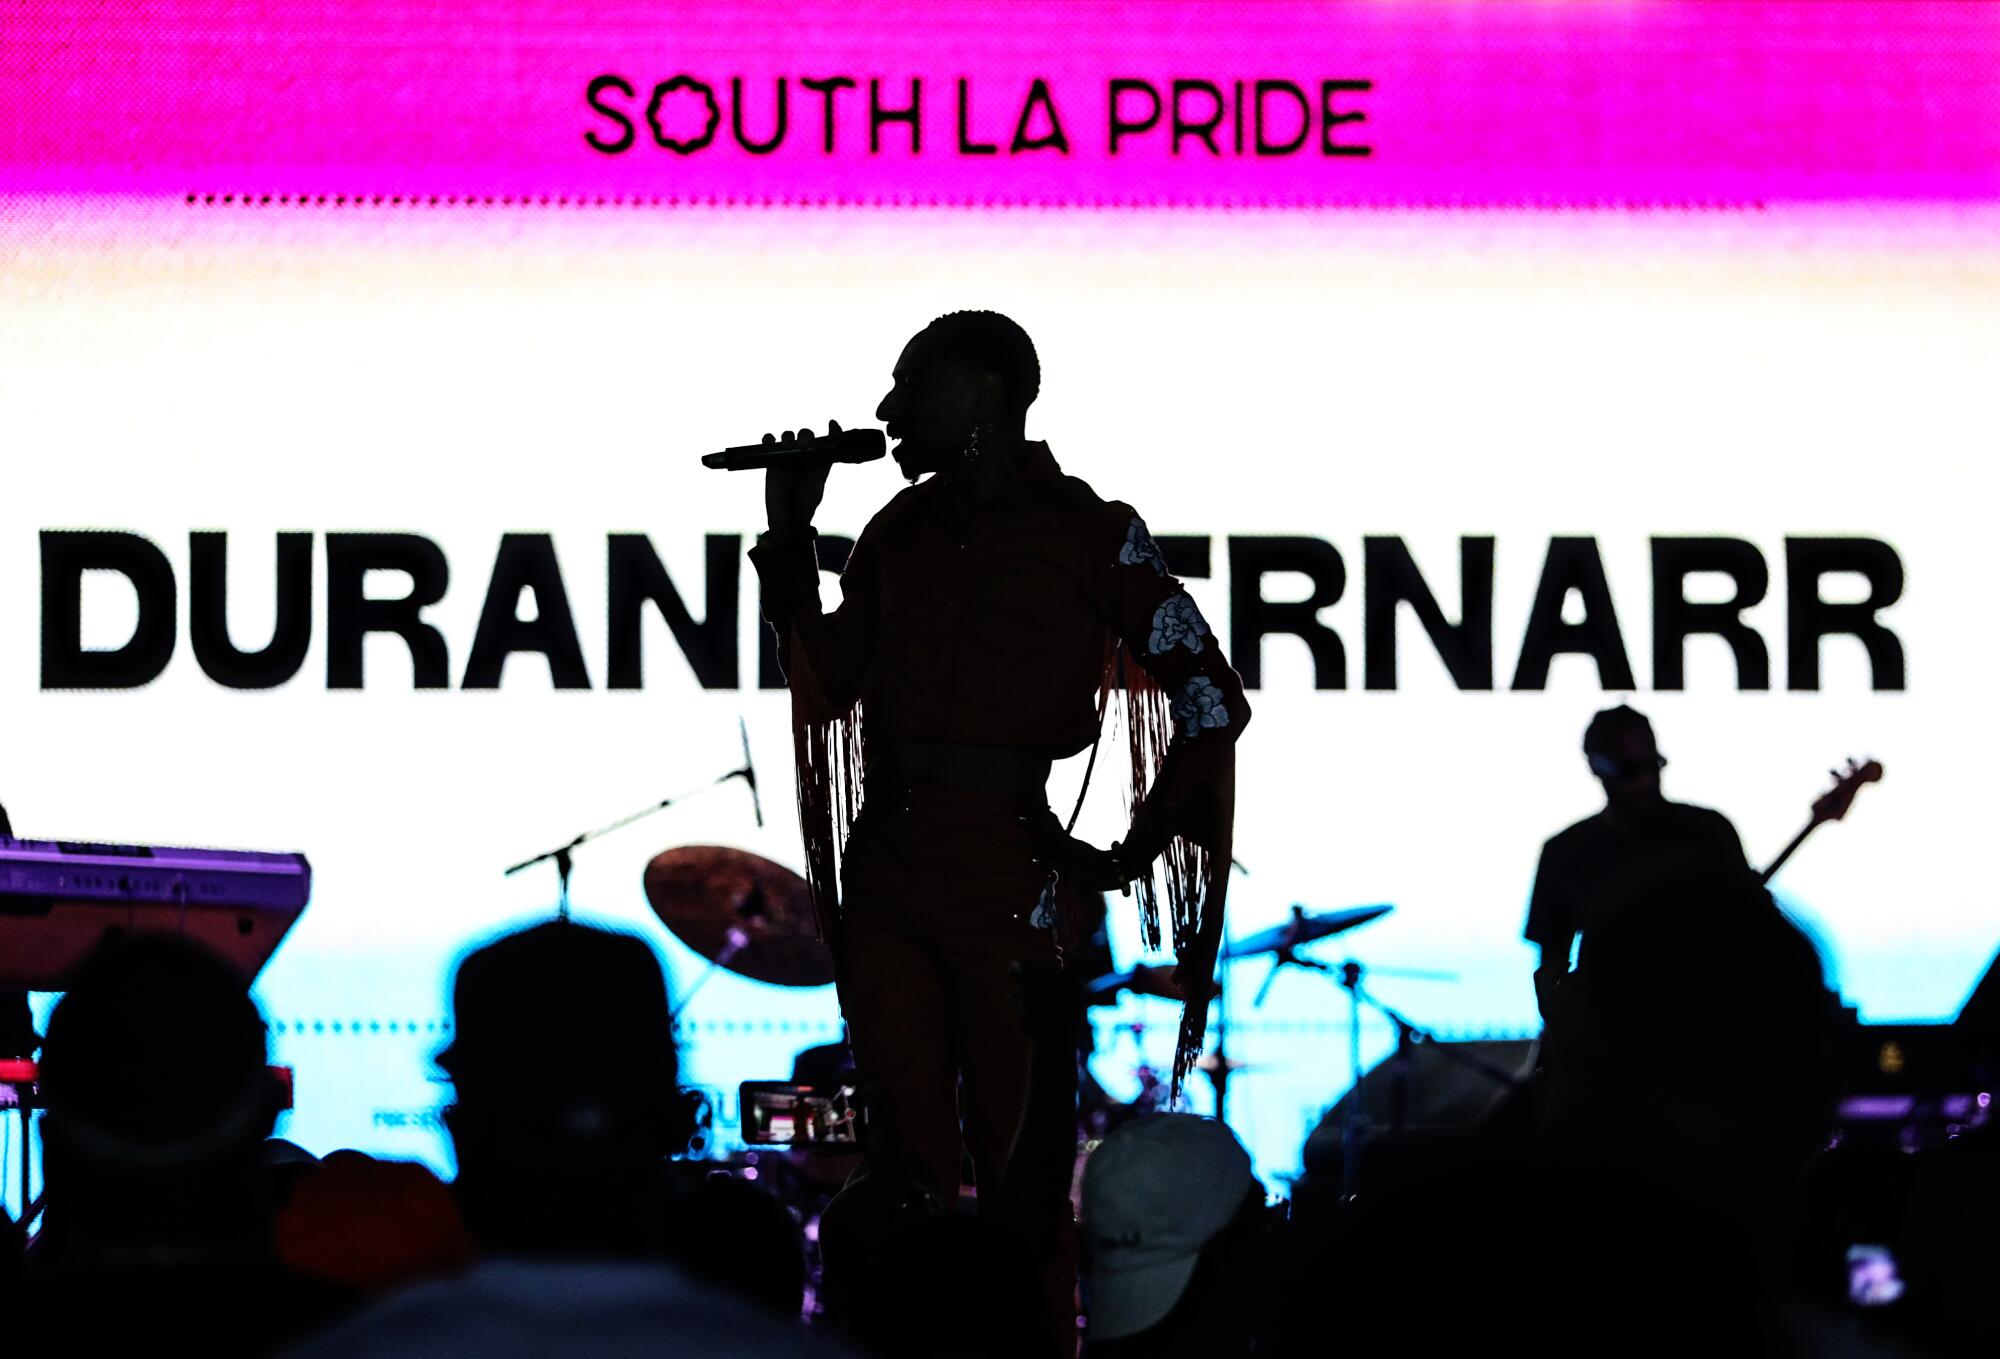 Durand Bernarr headlines the fifth annual South L.A. Pride.